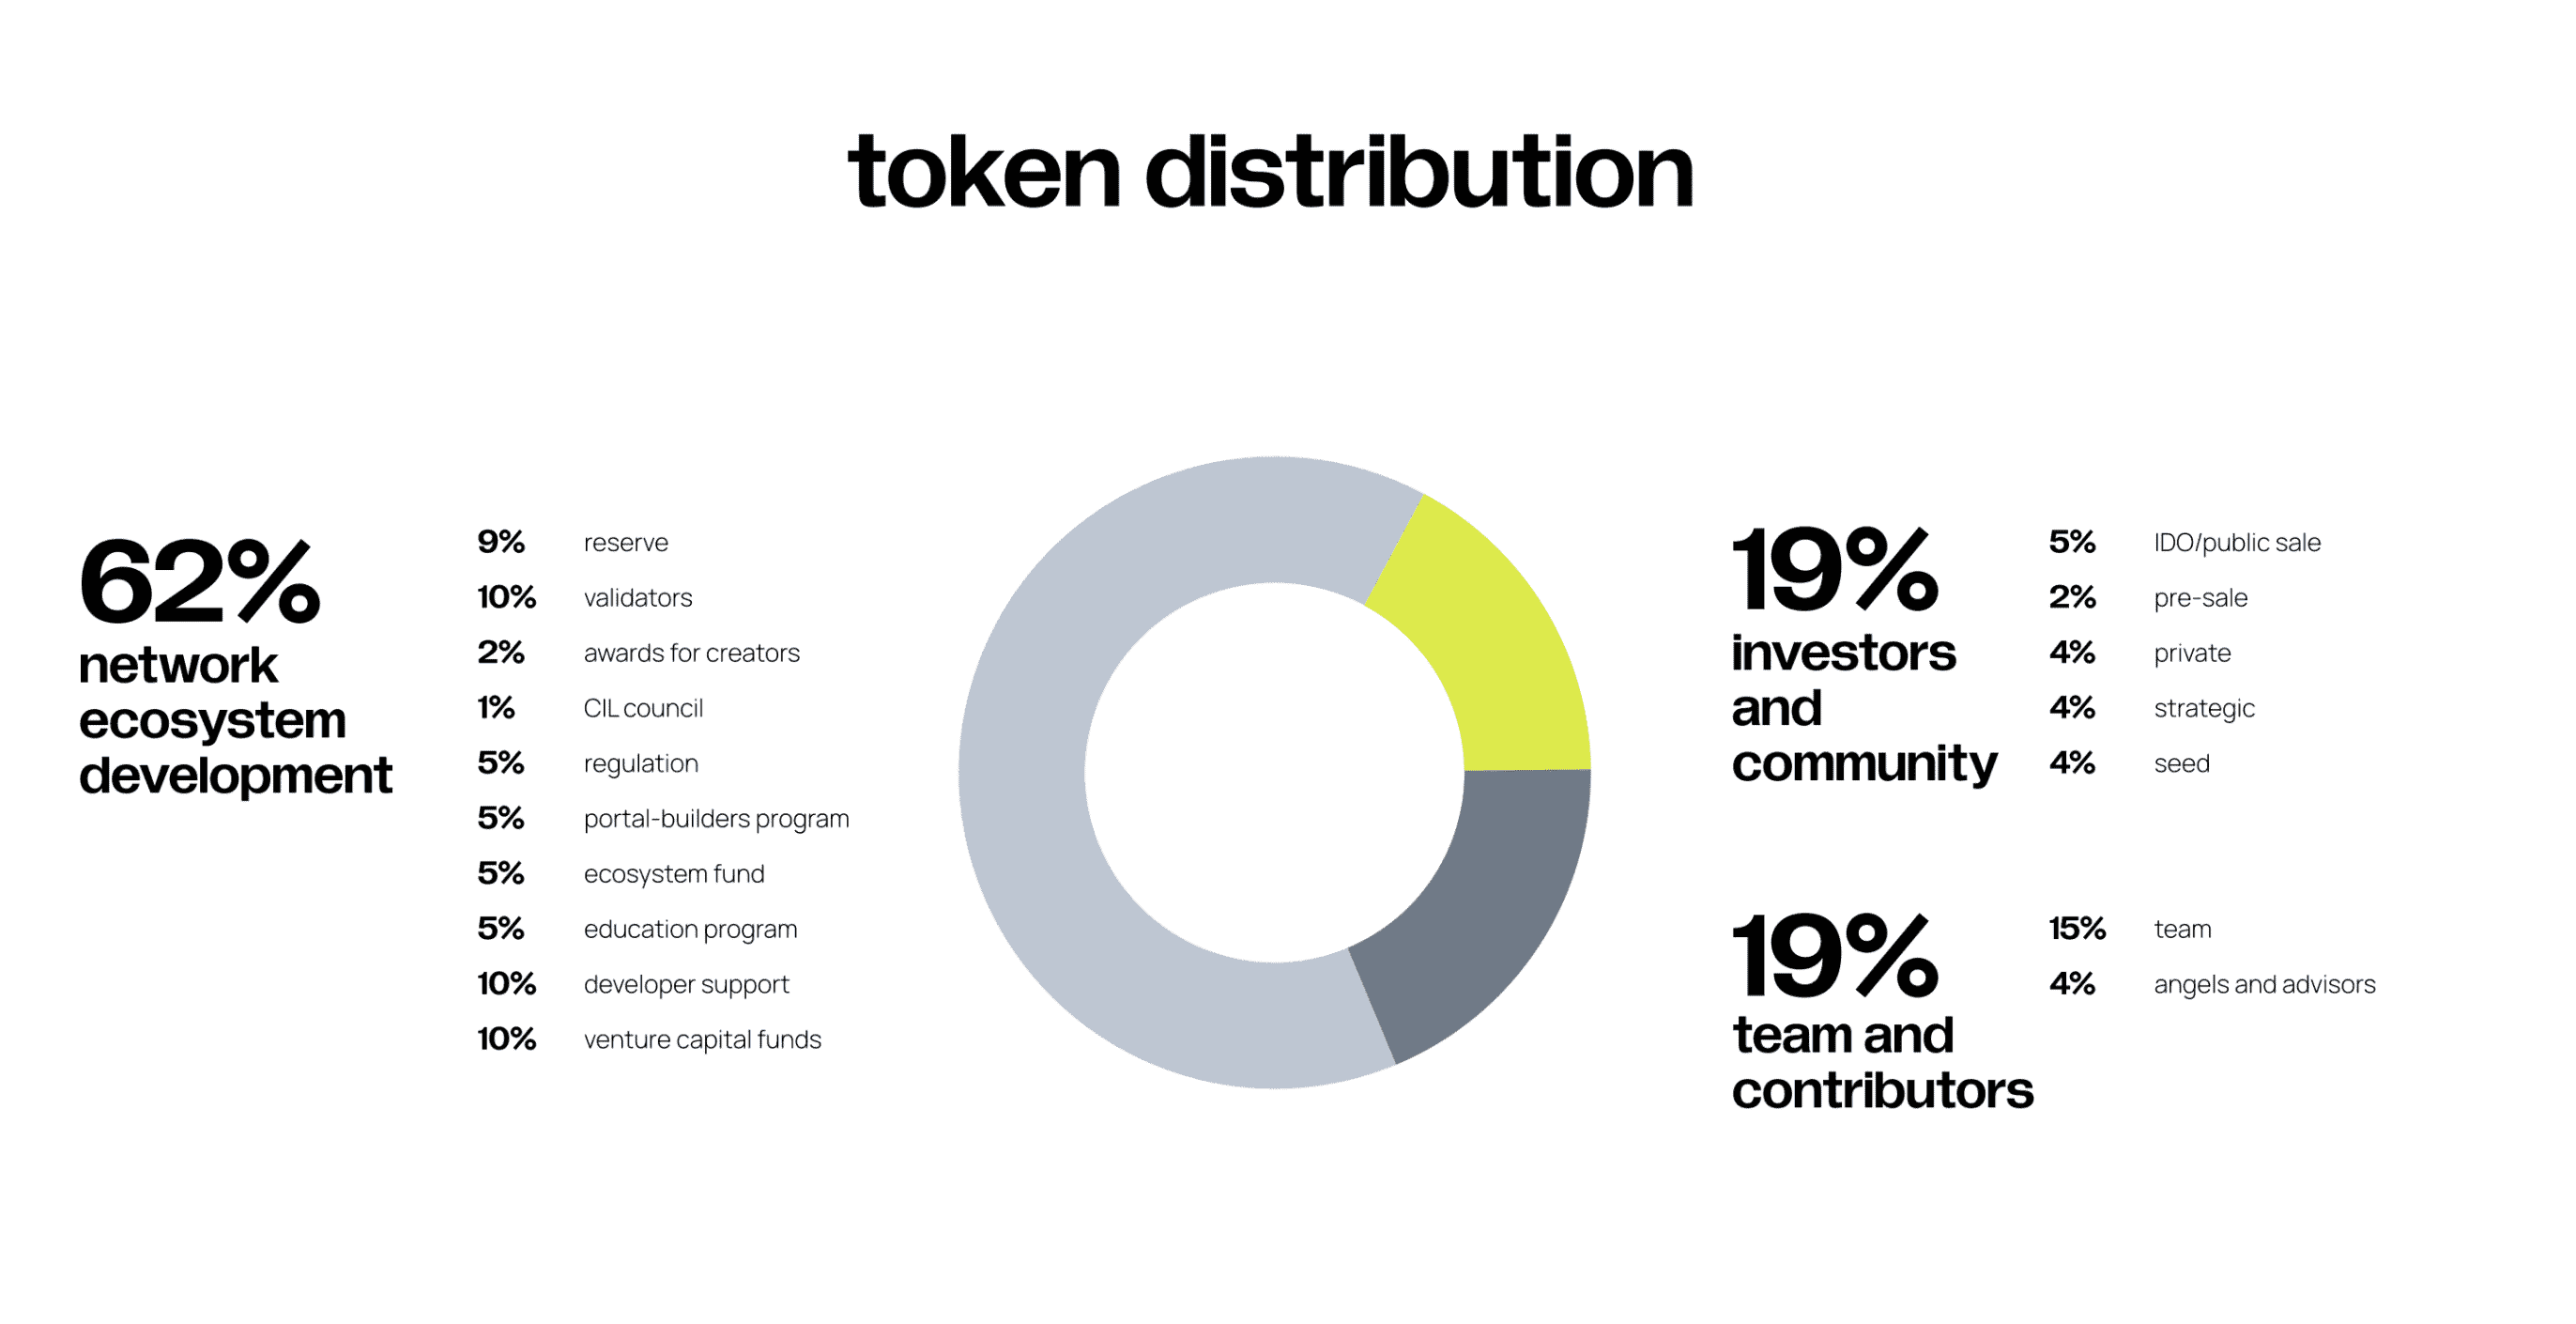  token distribution deip